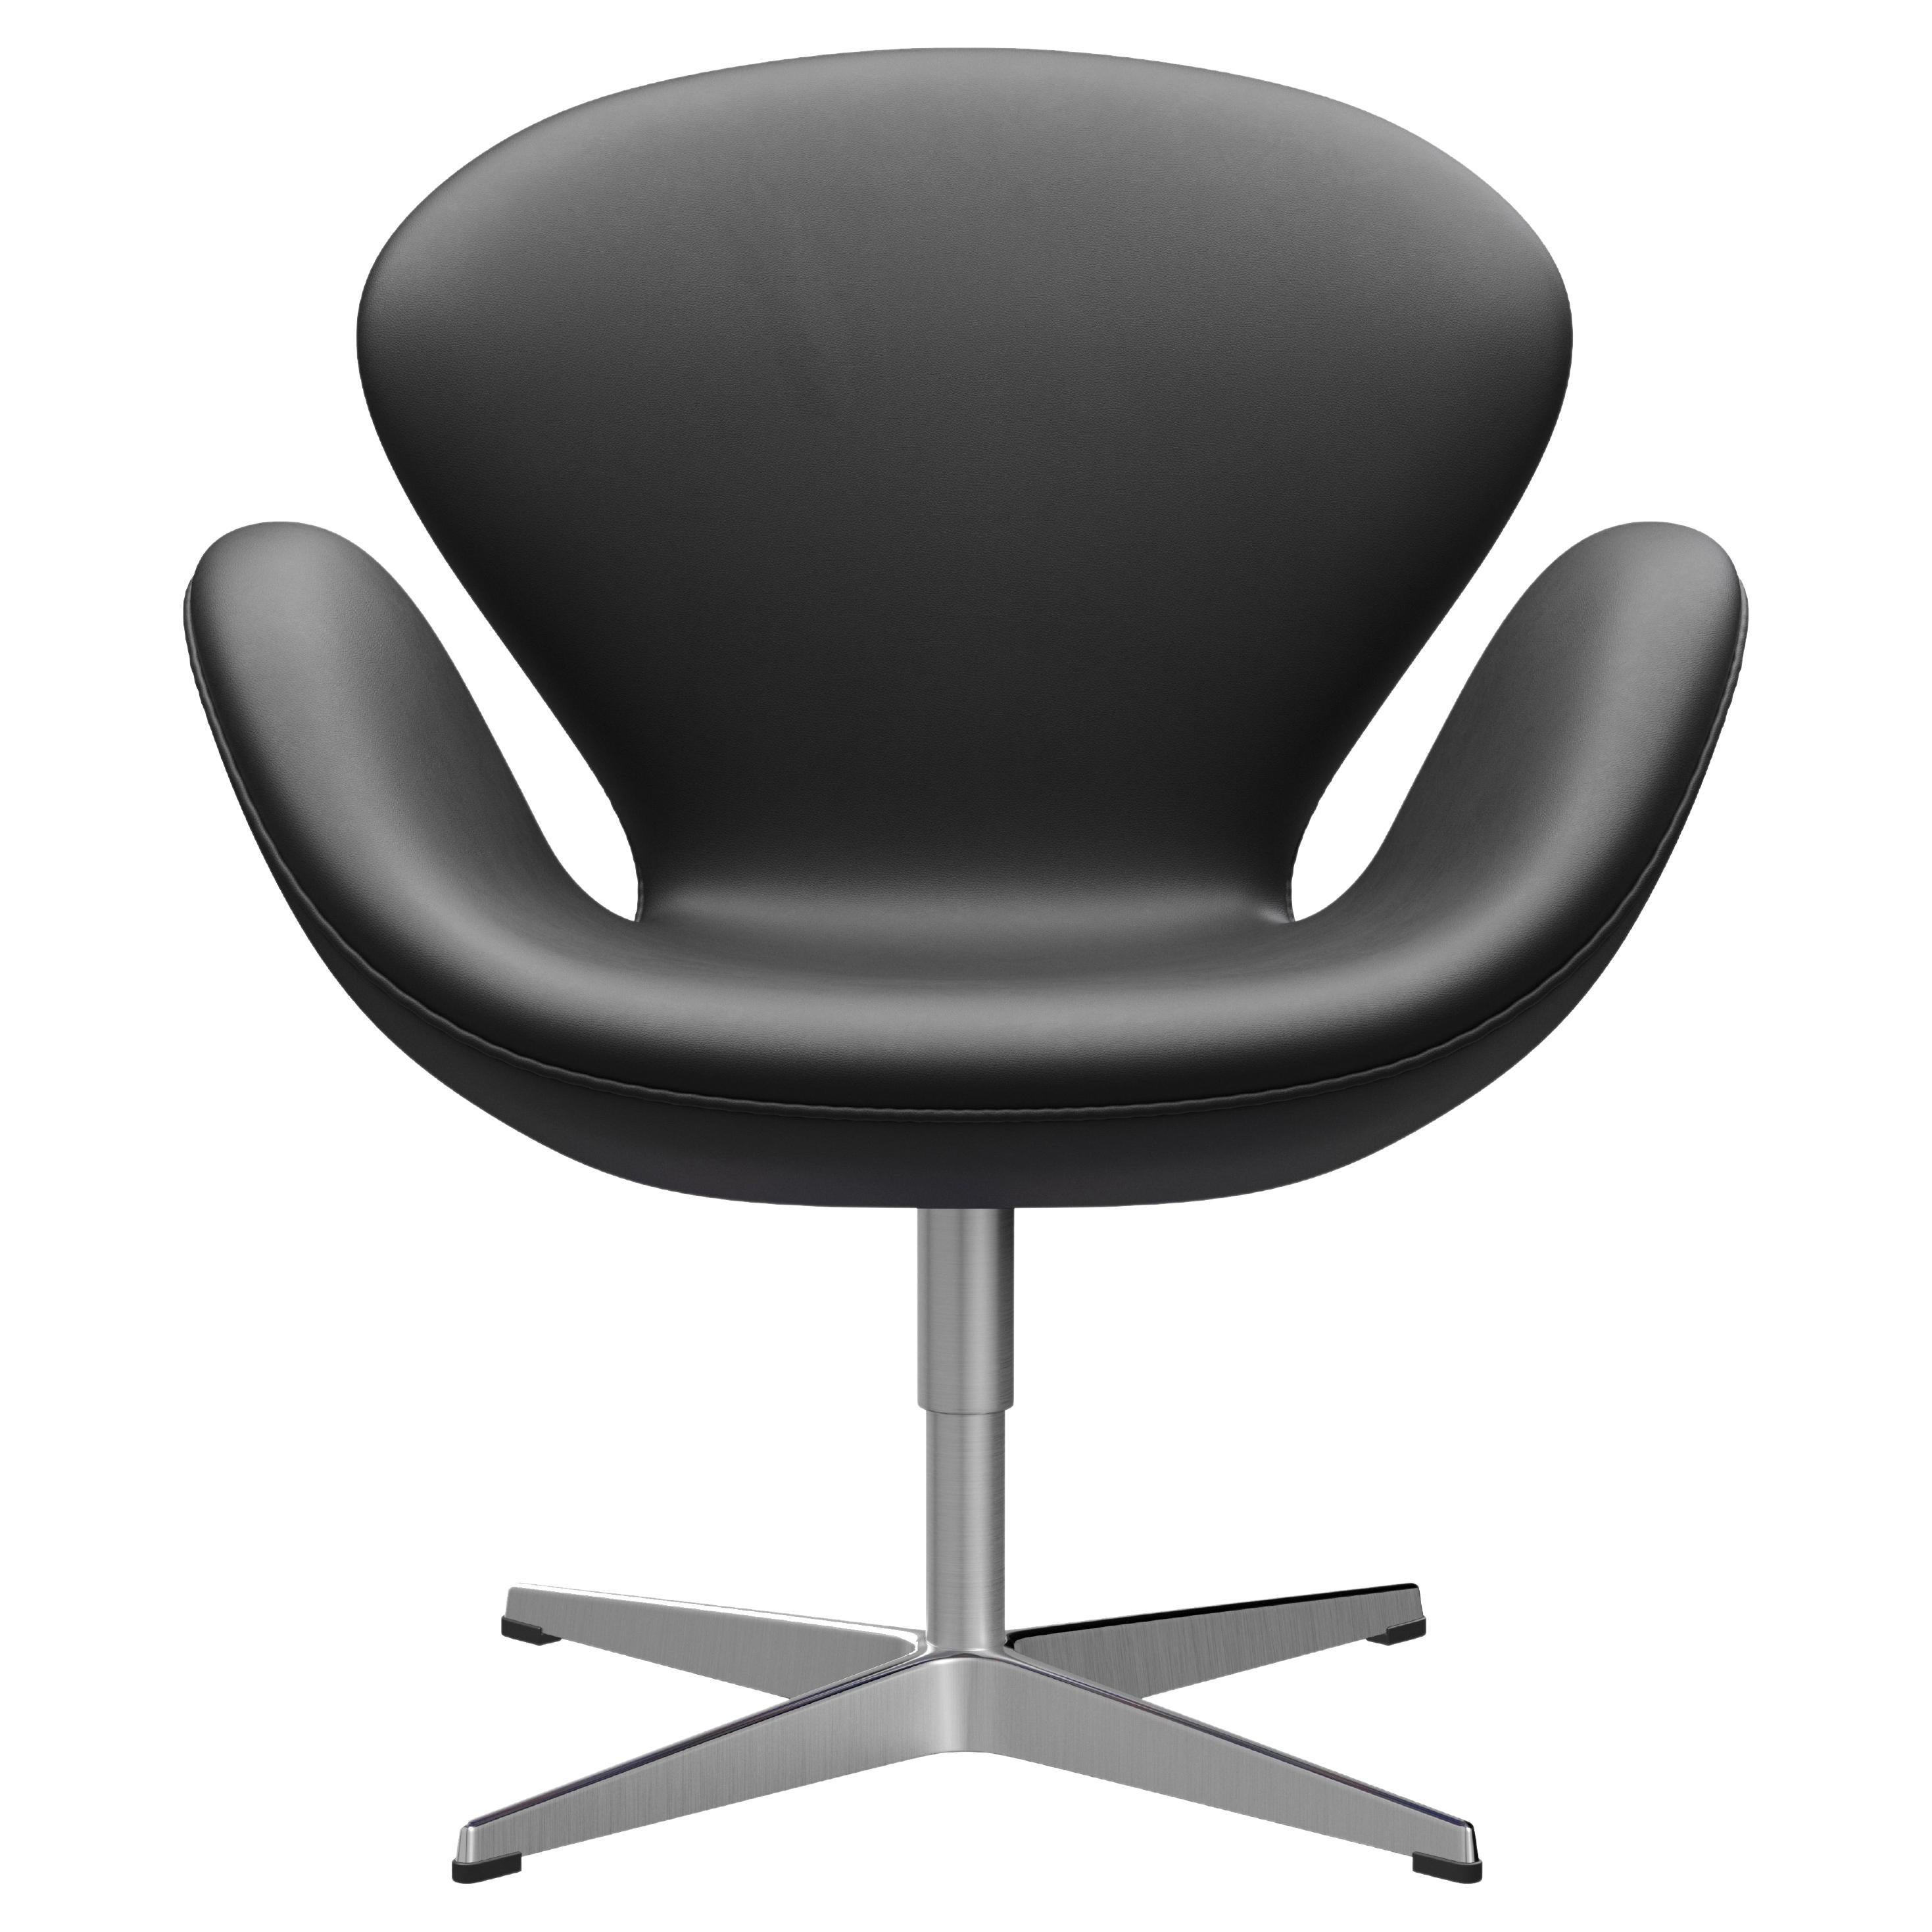 Arne Jacobsen 'Swan' Chair for Fritz Hansen in Leather Upholstery (Cat. 3) For Sale